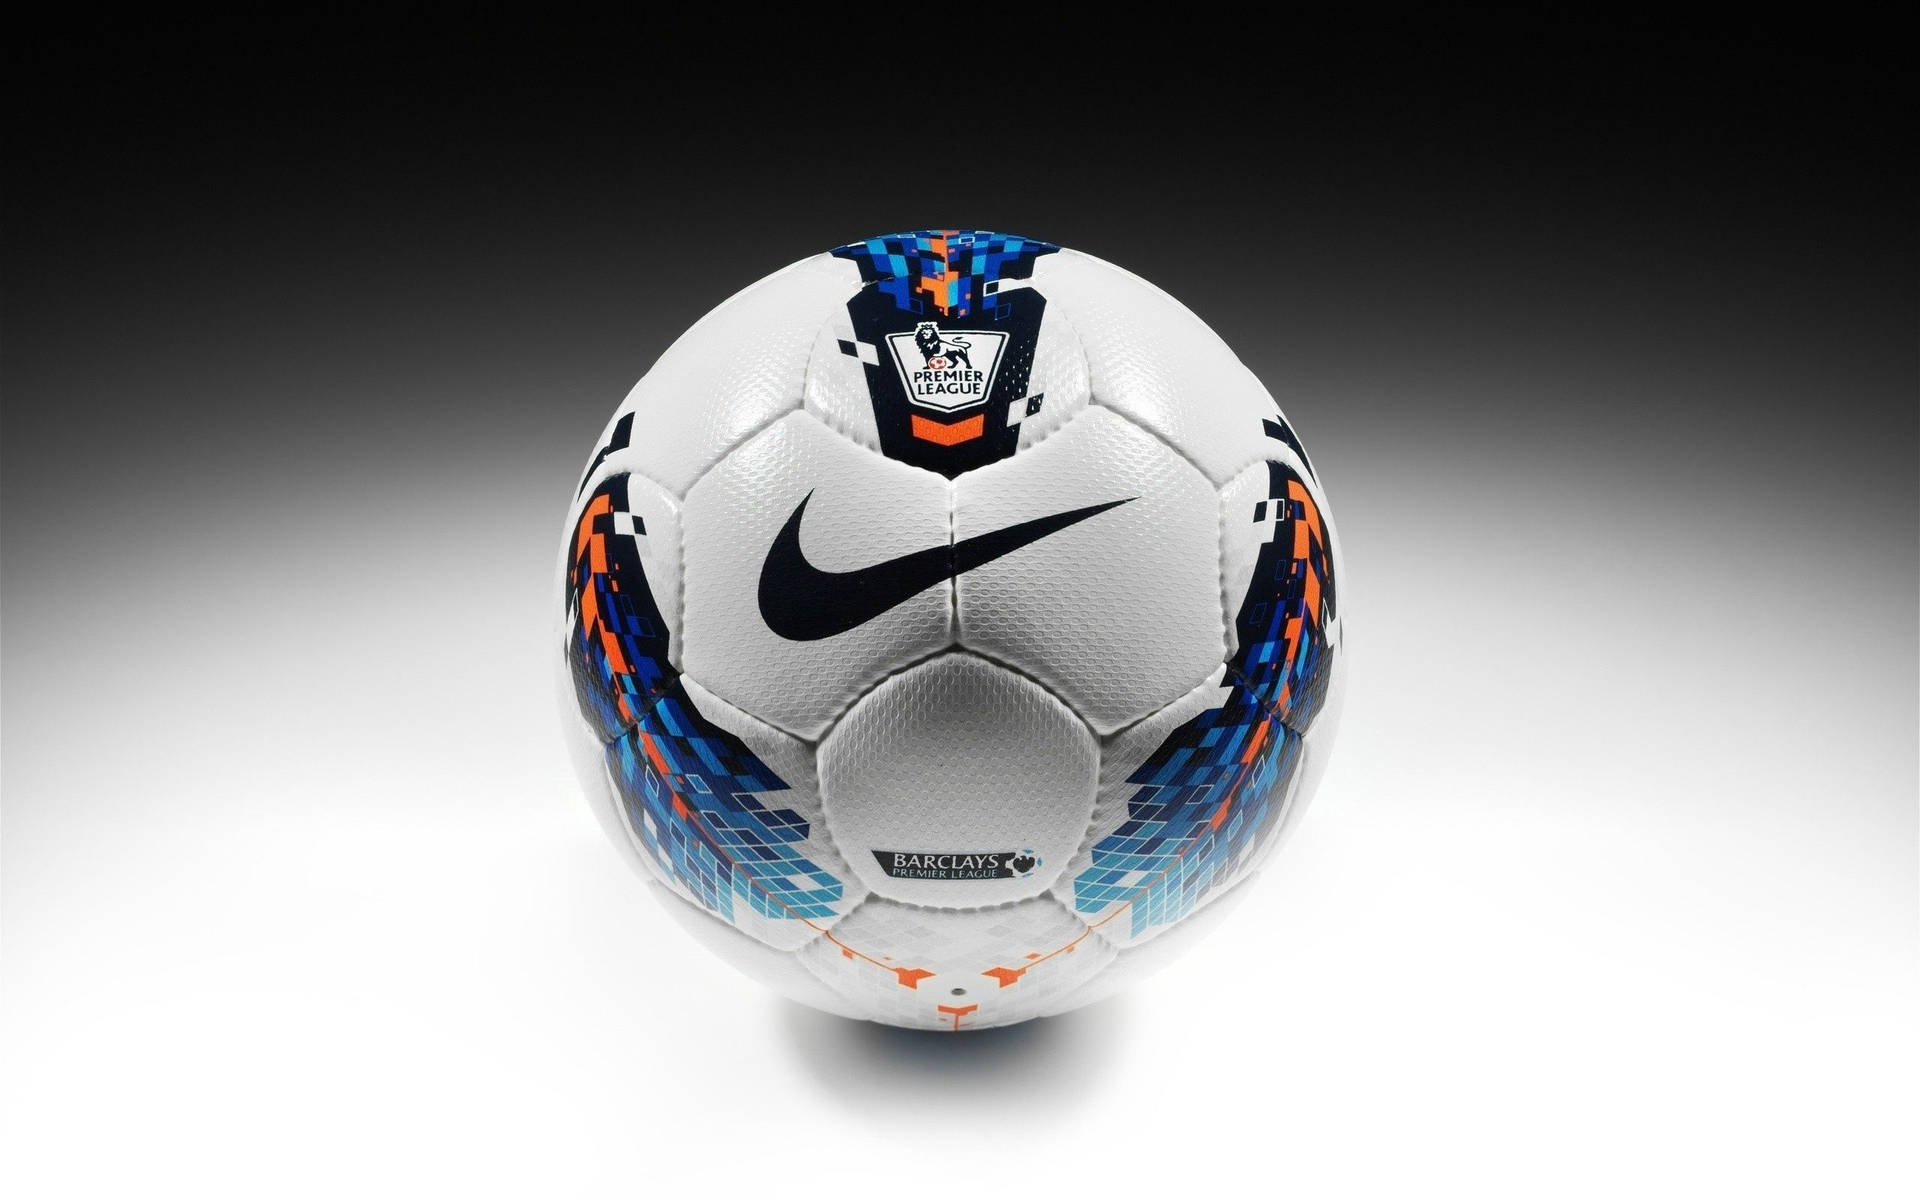 Football, Nike, Ball, Barclays Premier League, Sport, Premier League